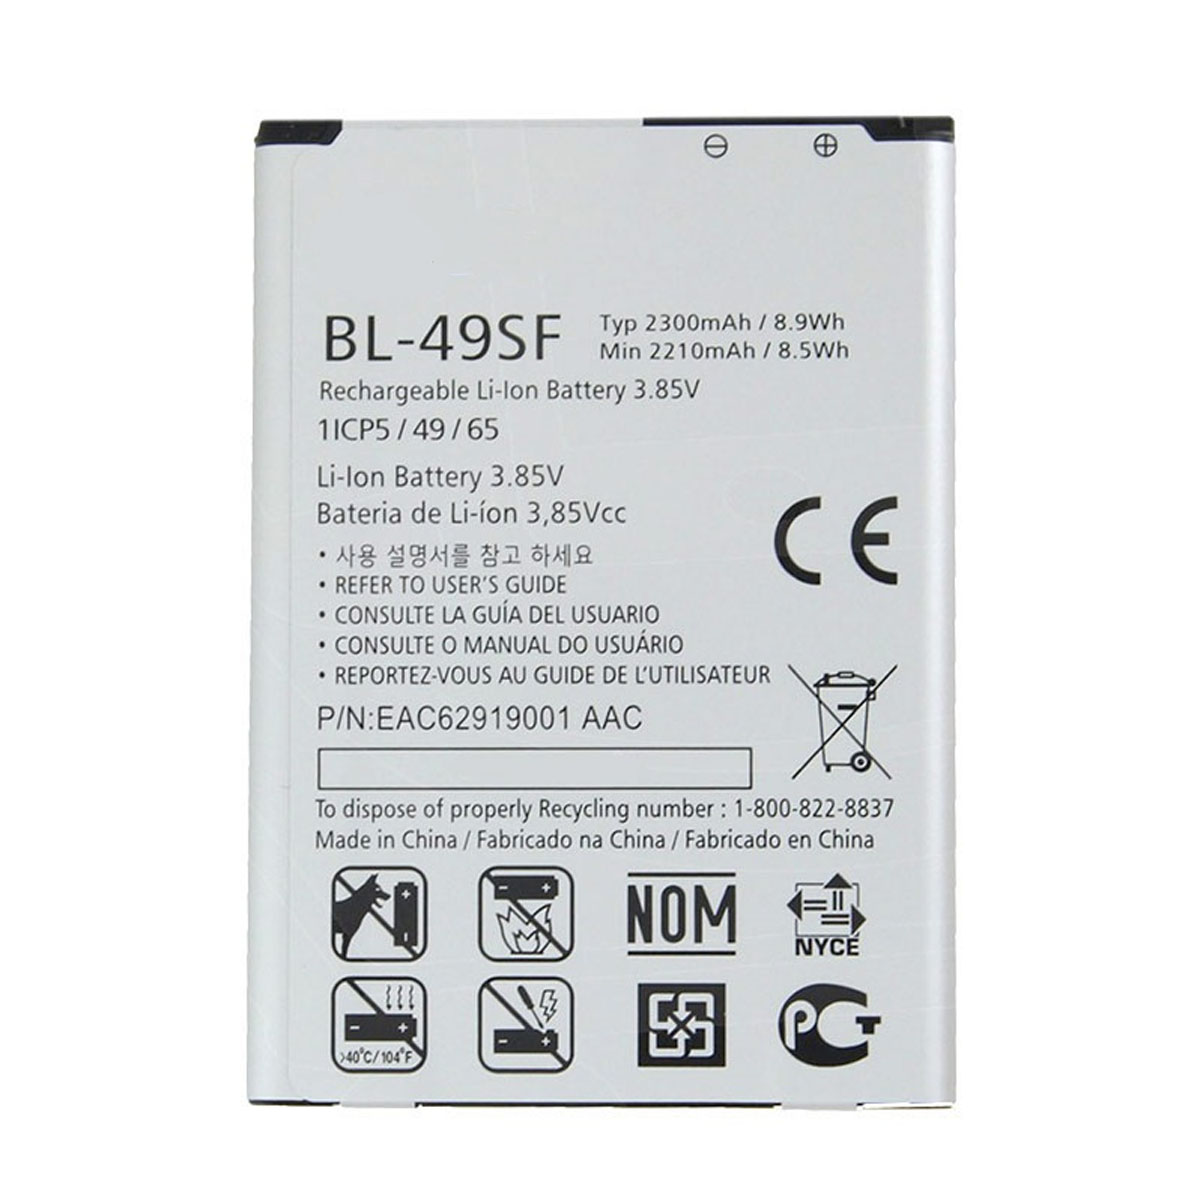 АКБ (Аккумулятор) BL-49SF для LG H736 G4S, 2300mAh, 3.85V, цвет серый